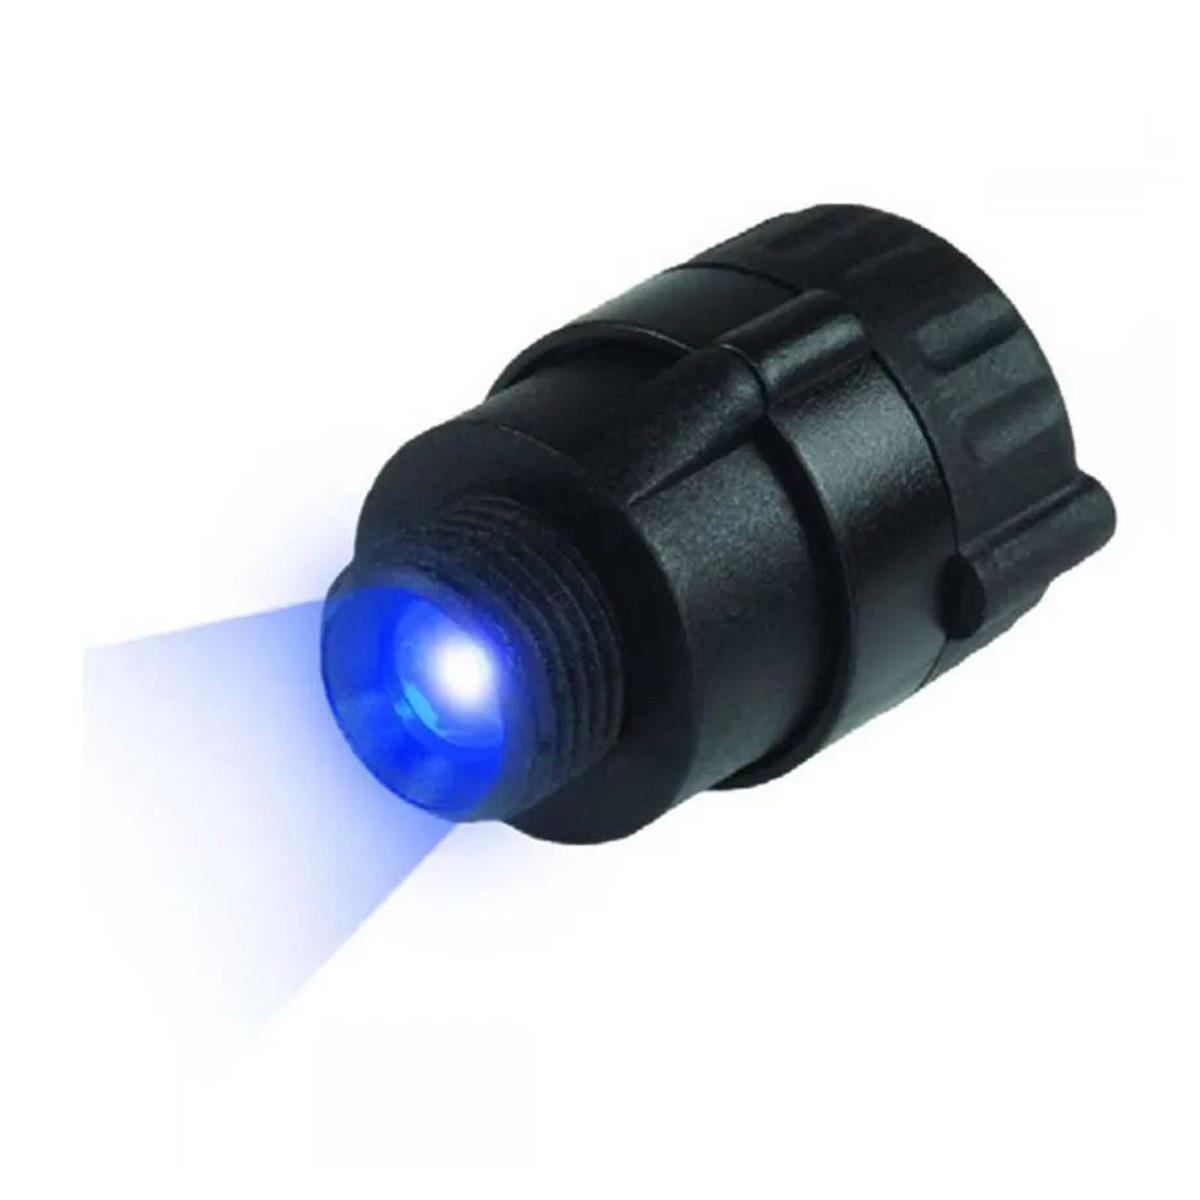 

Apex Gear Revolve Adjustable Sight Rotary Light with 3 Brightness Levels, Blue